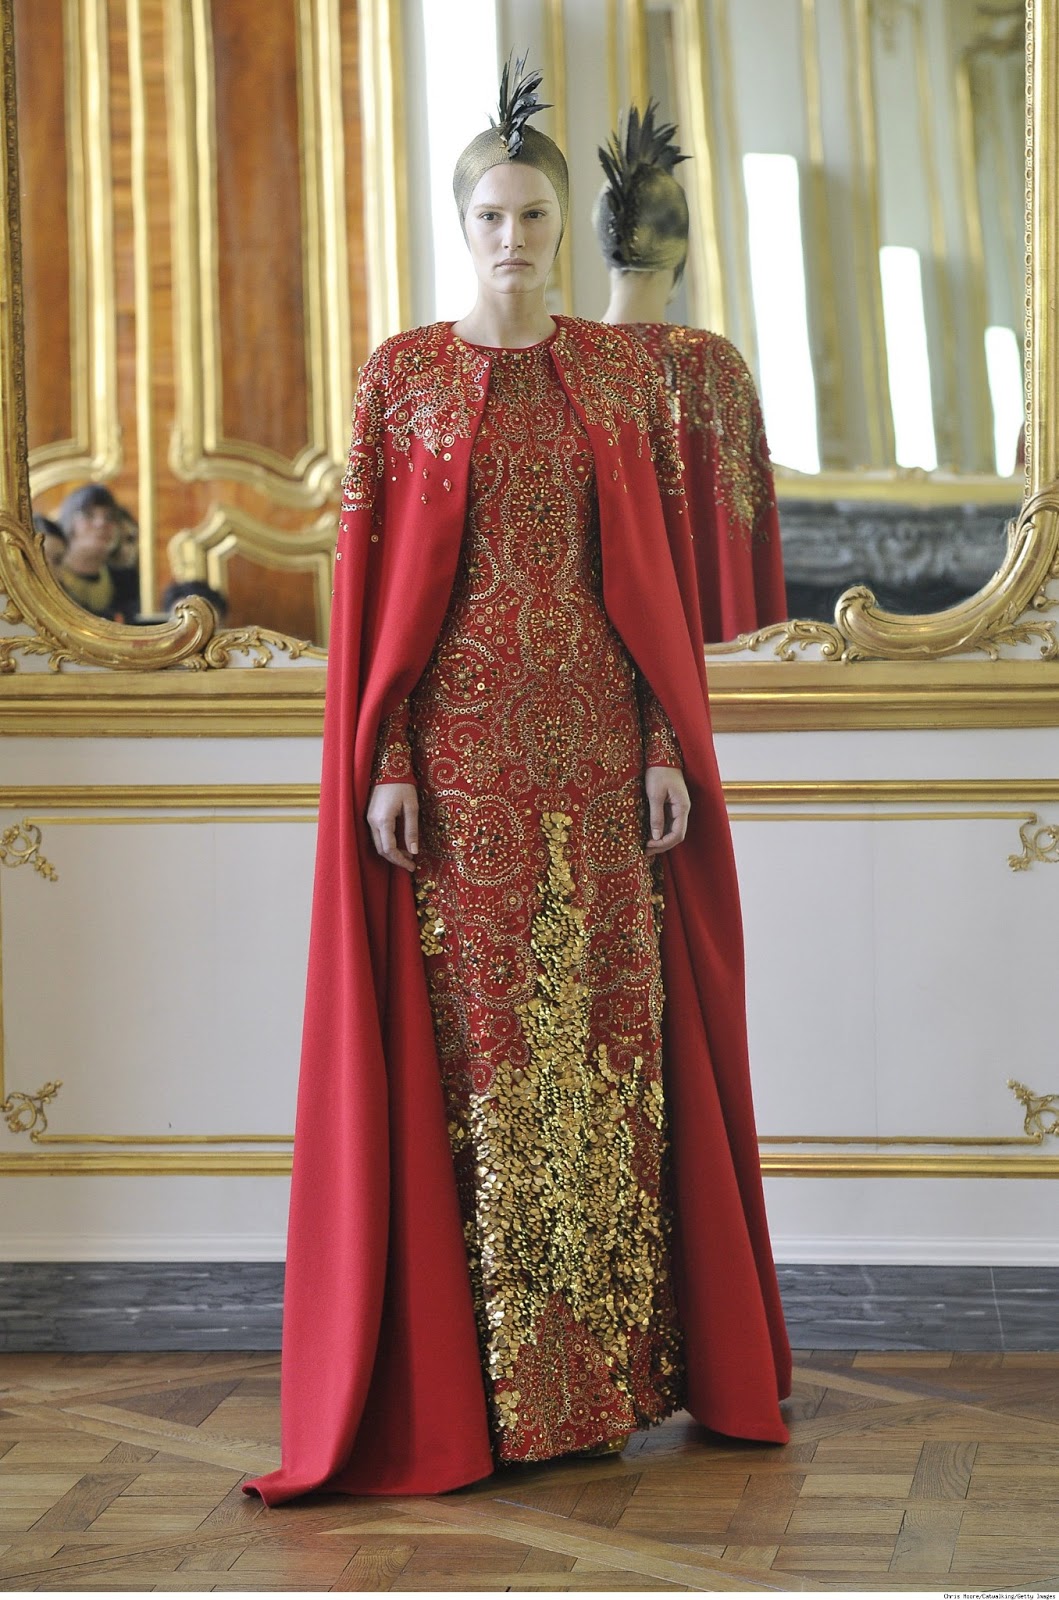 Costume Construction Inspiration: Baroque Fashion